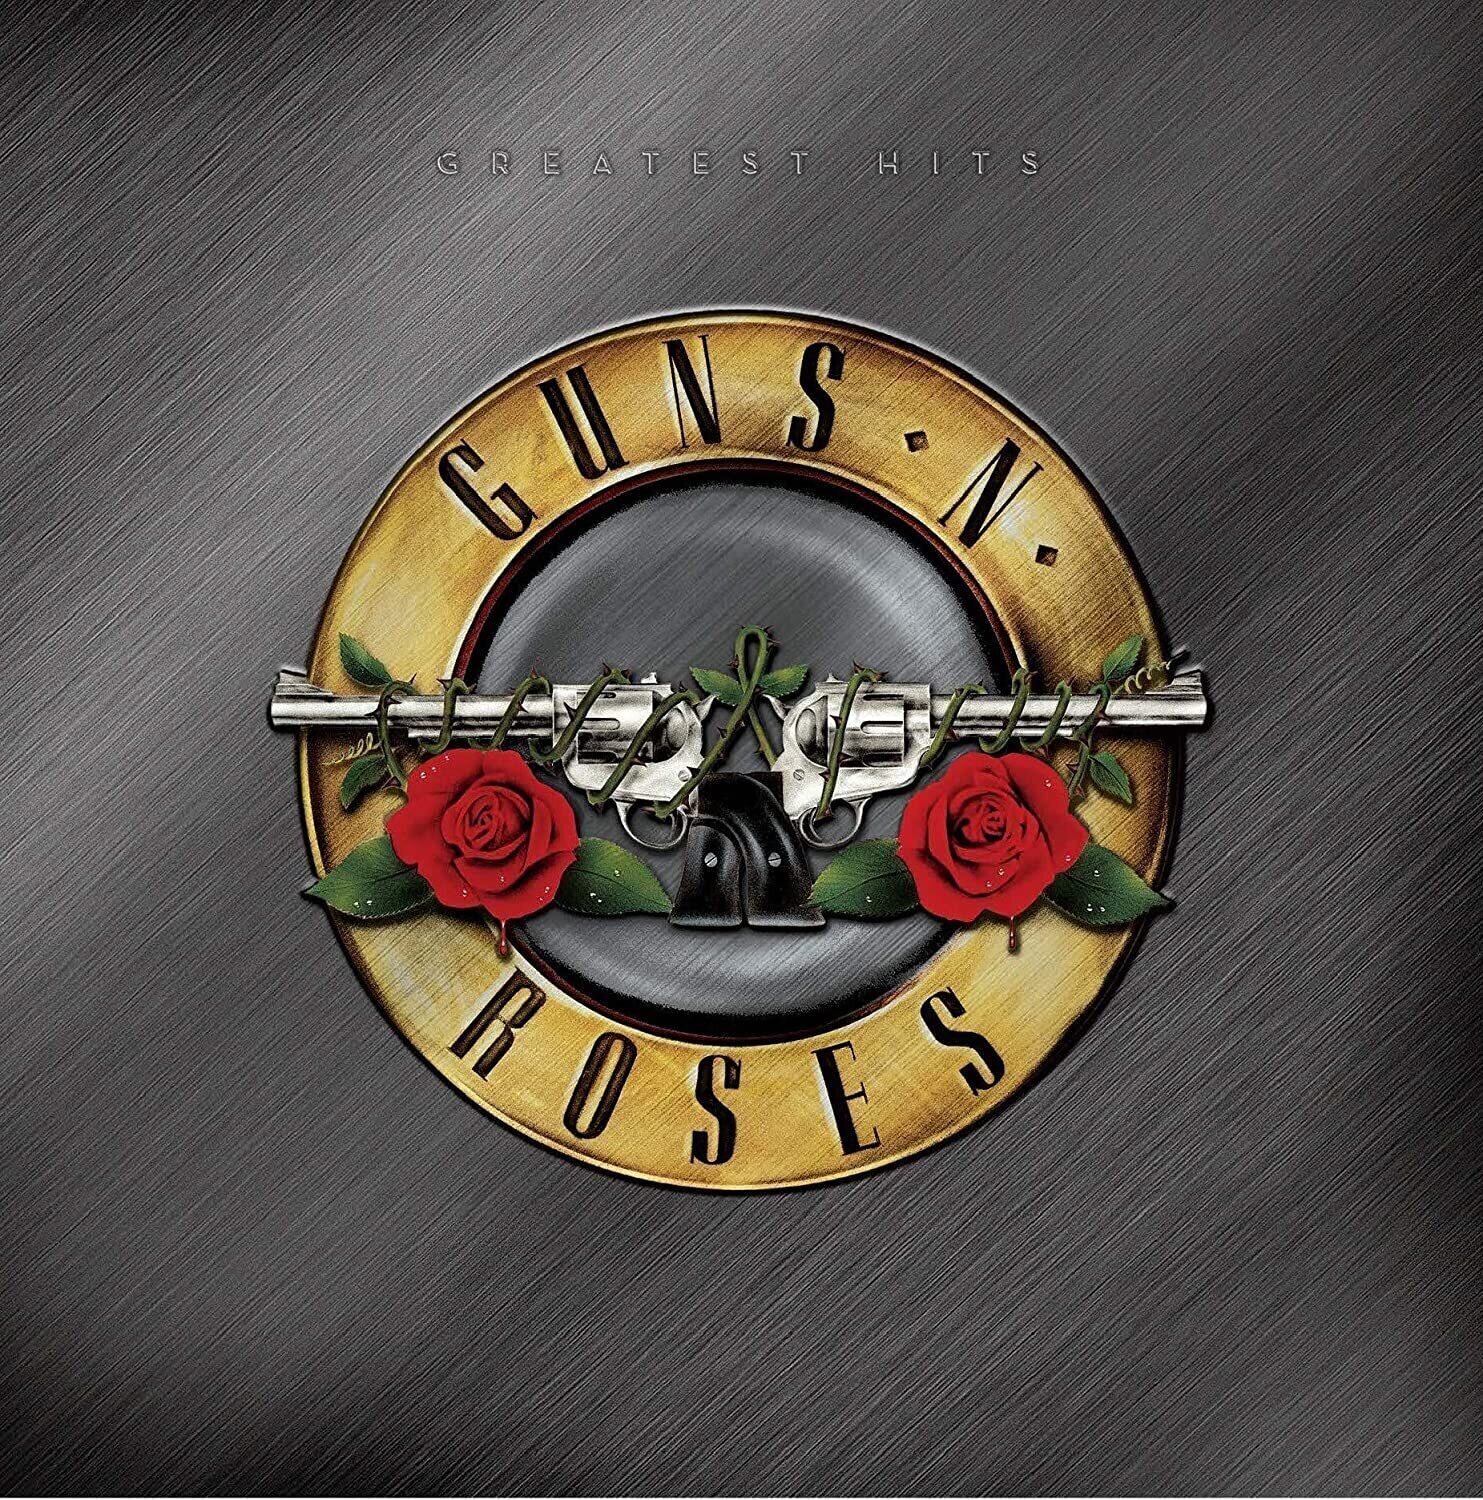 Vinyl Record Guns N' Roses - Greatest Hits (2 LP) (180g)